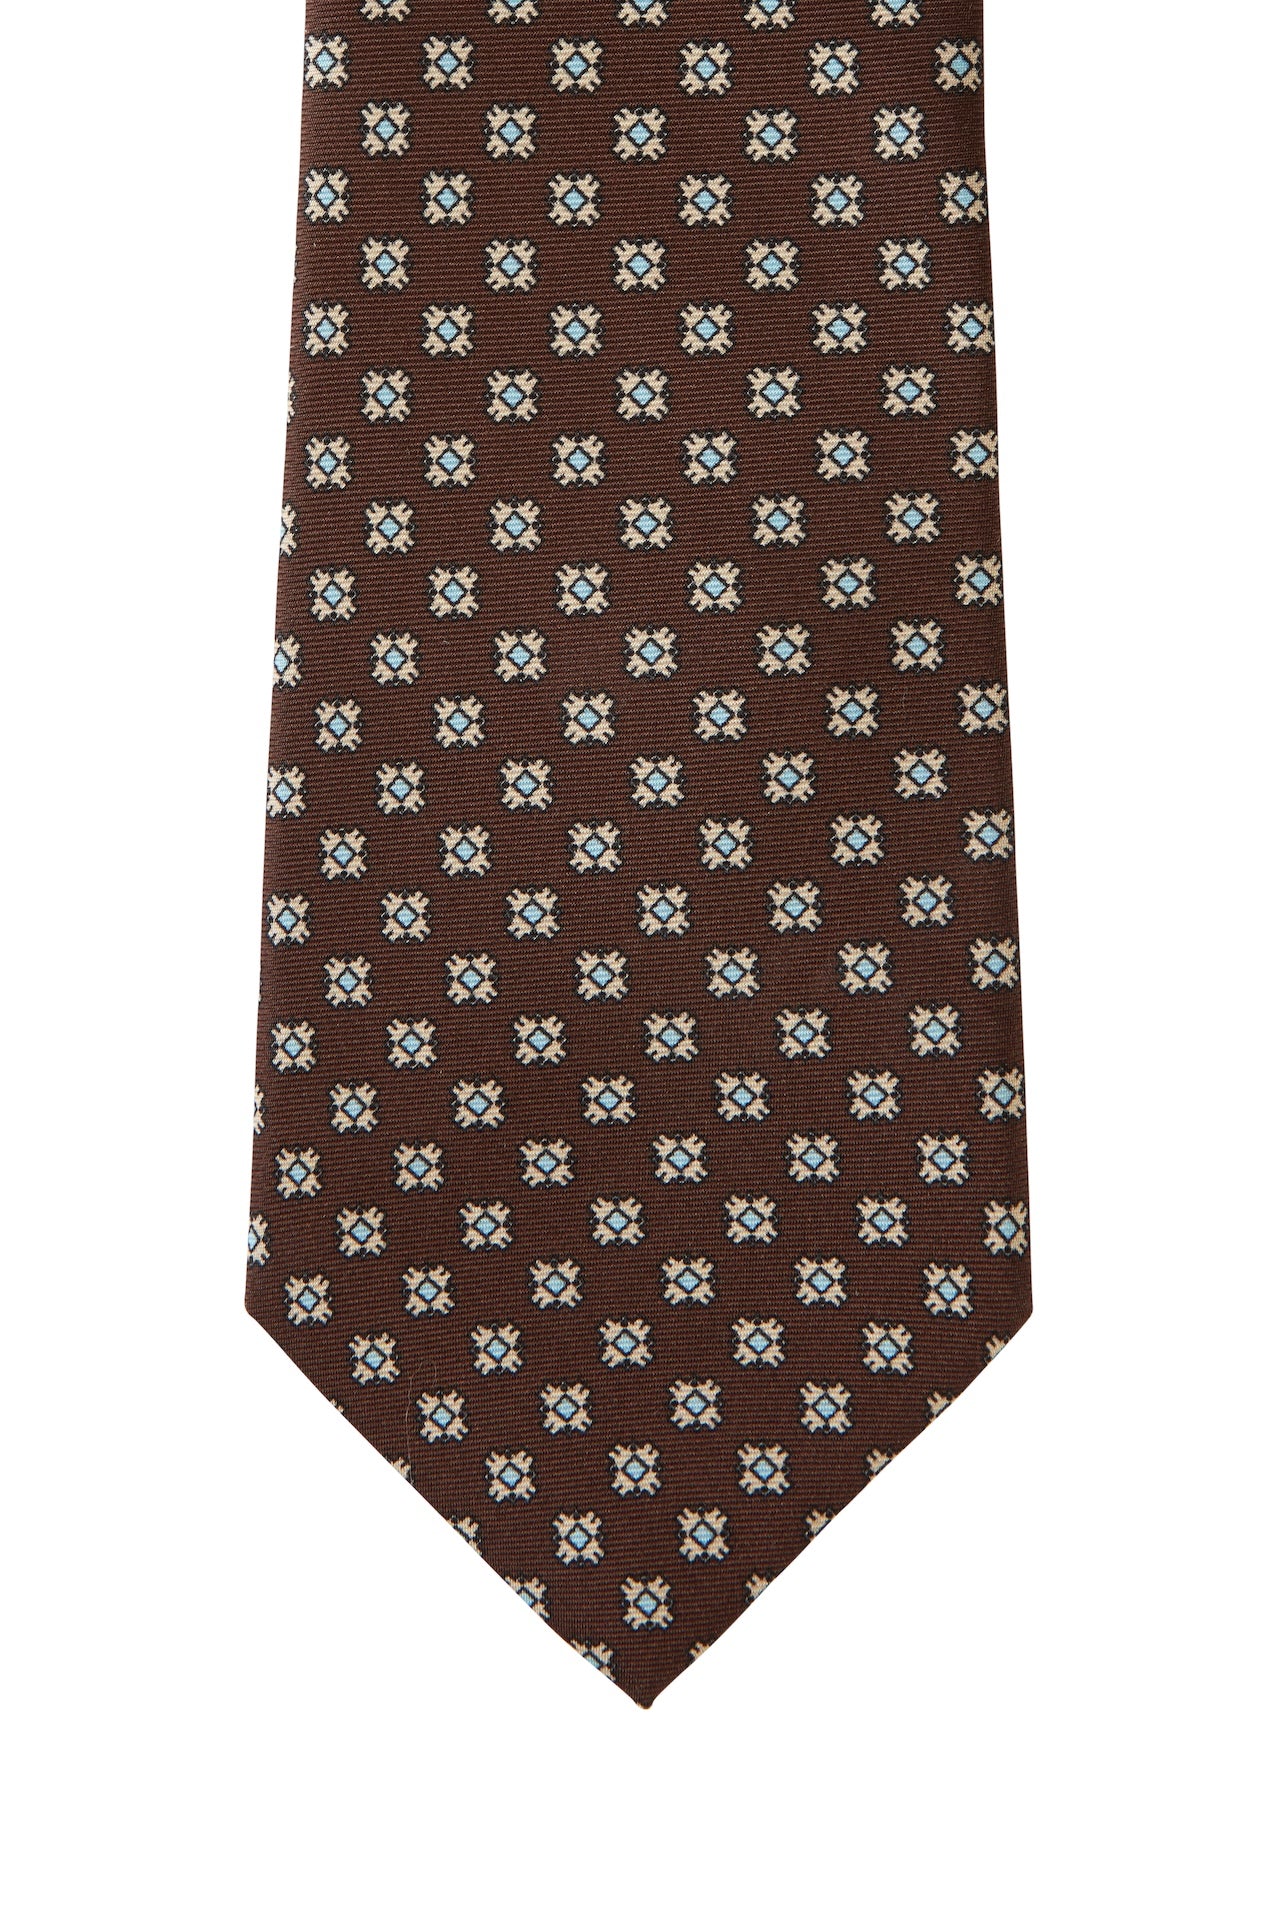 Brown square pattern Tie